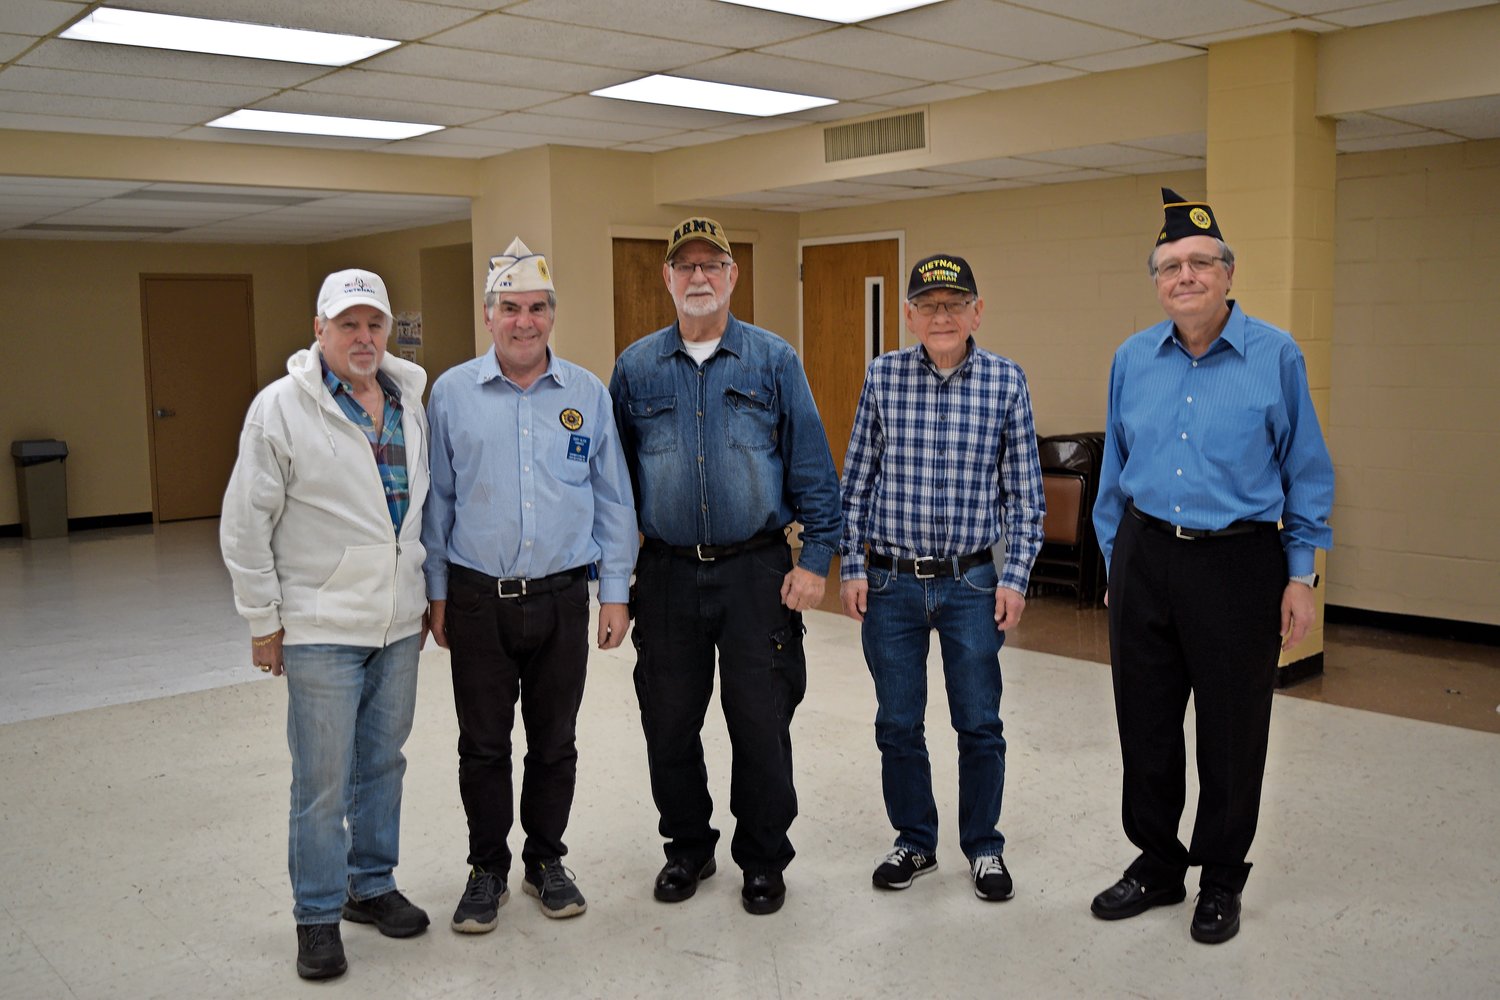 Steve Friedman, far left, Gary Glick, Eric Spinner, Jeff Newman and Freeberg, members of Jewish War Veterans Post 652, which is headquartered in Merrick.